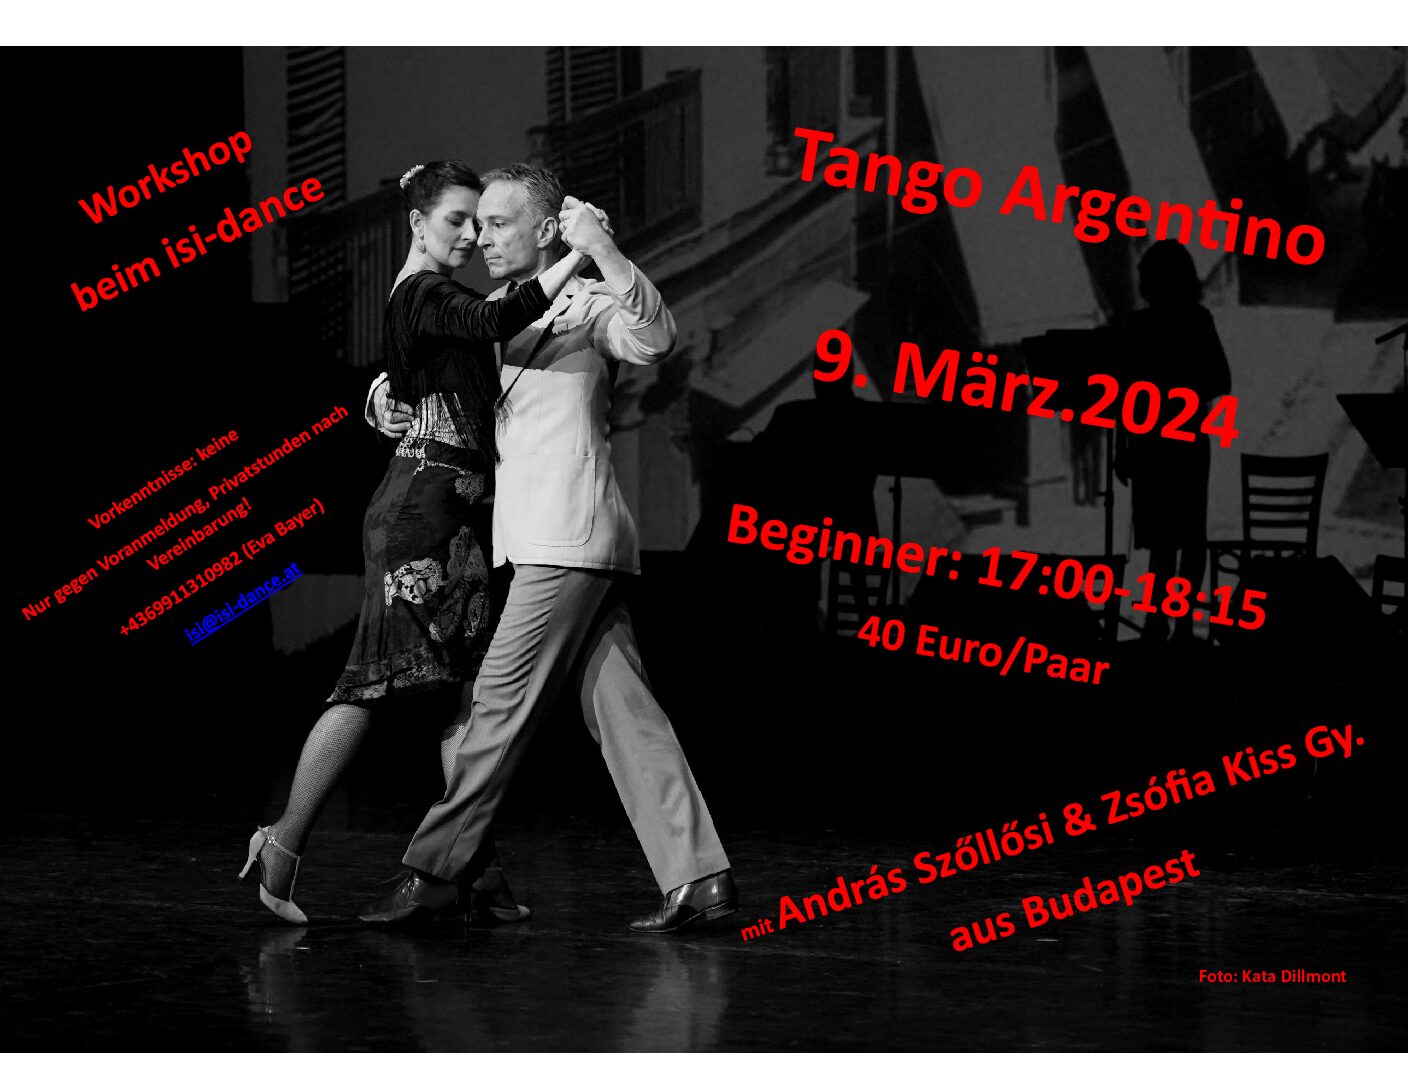 tango argentino workshop